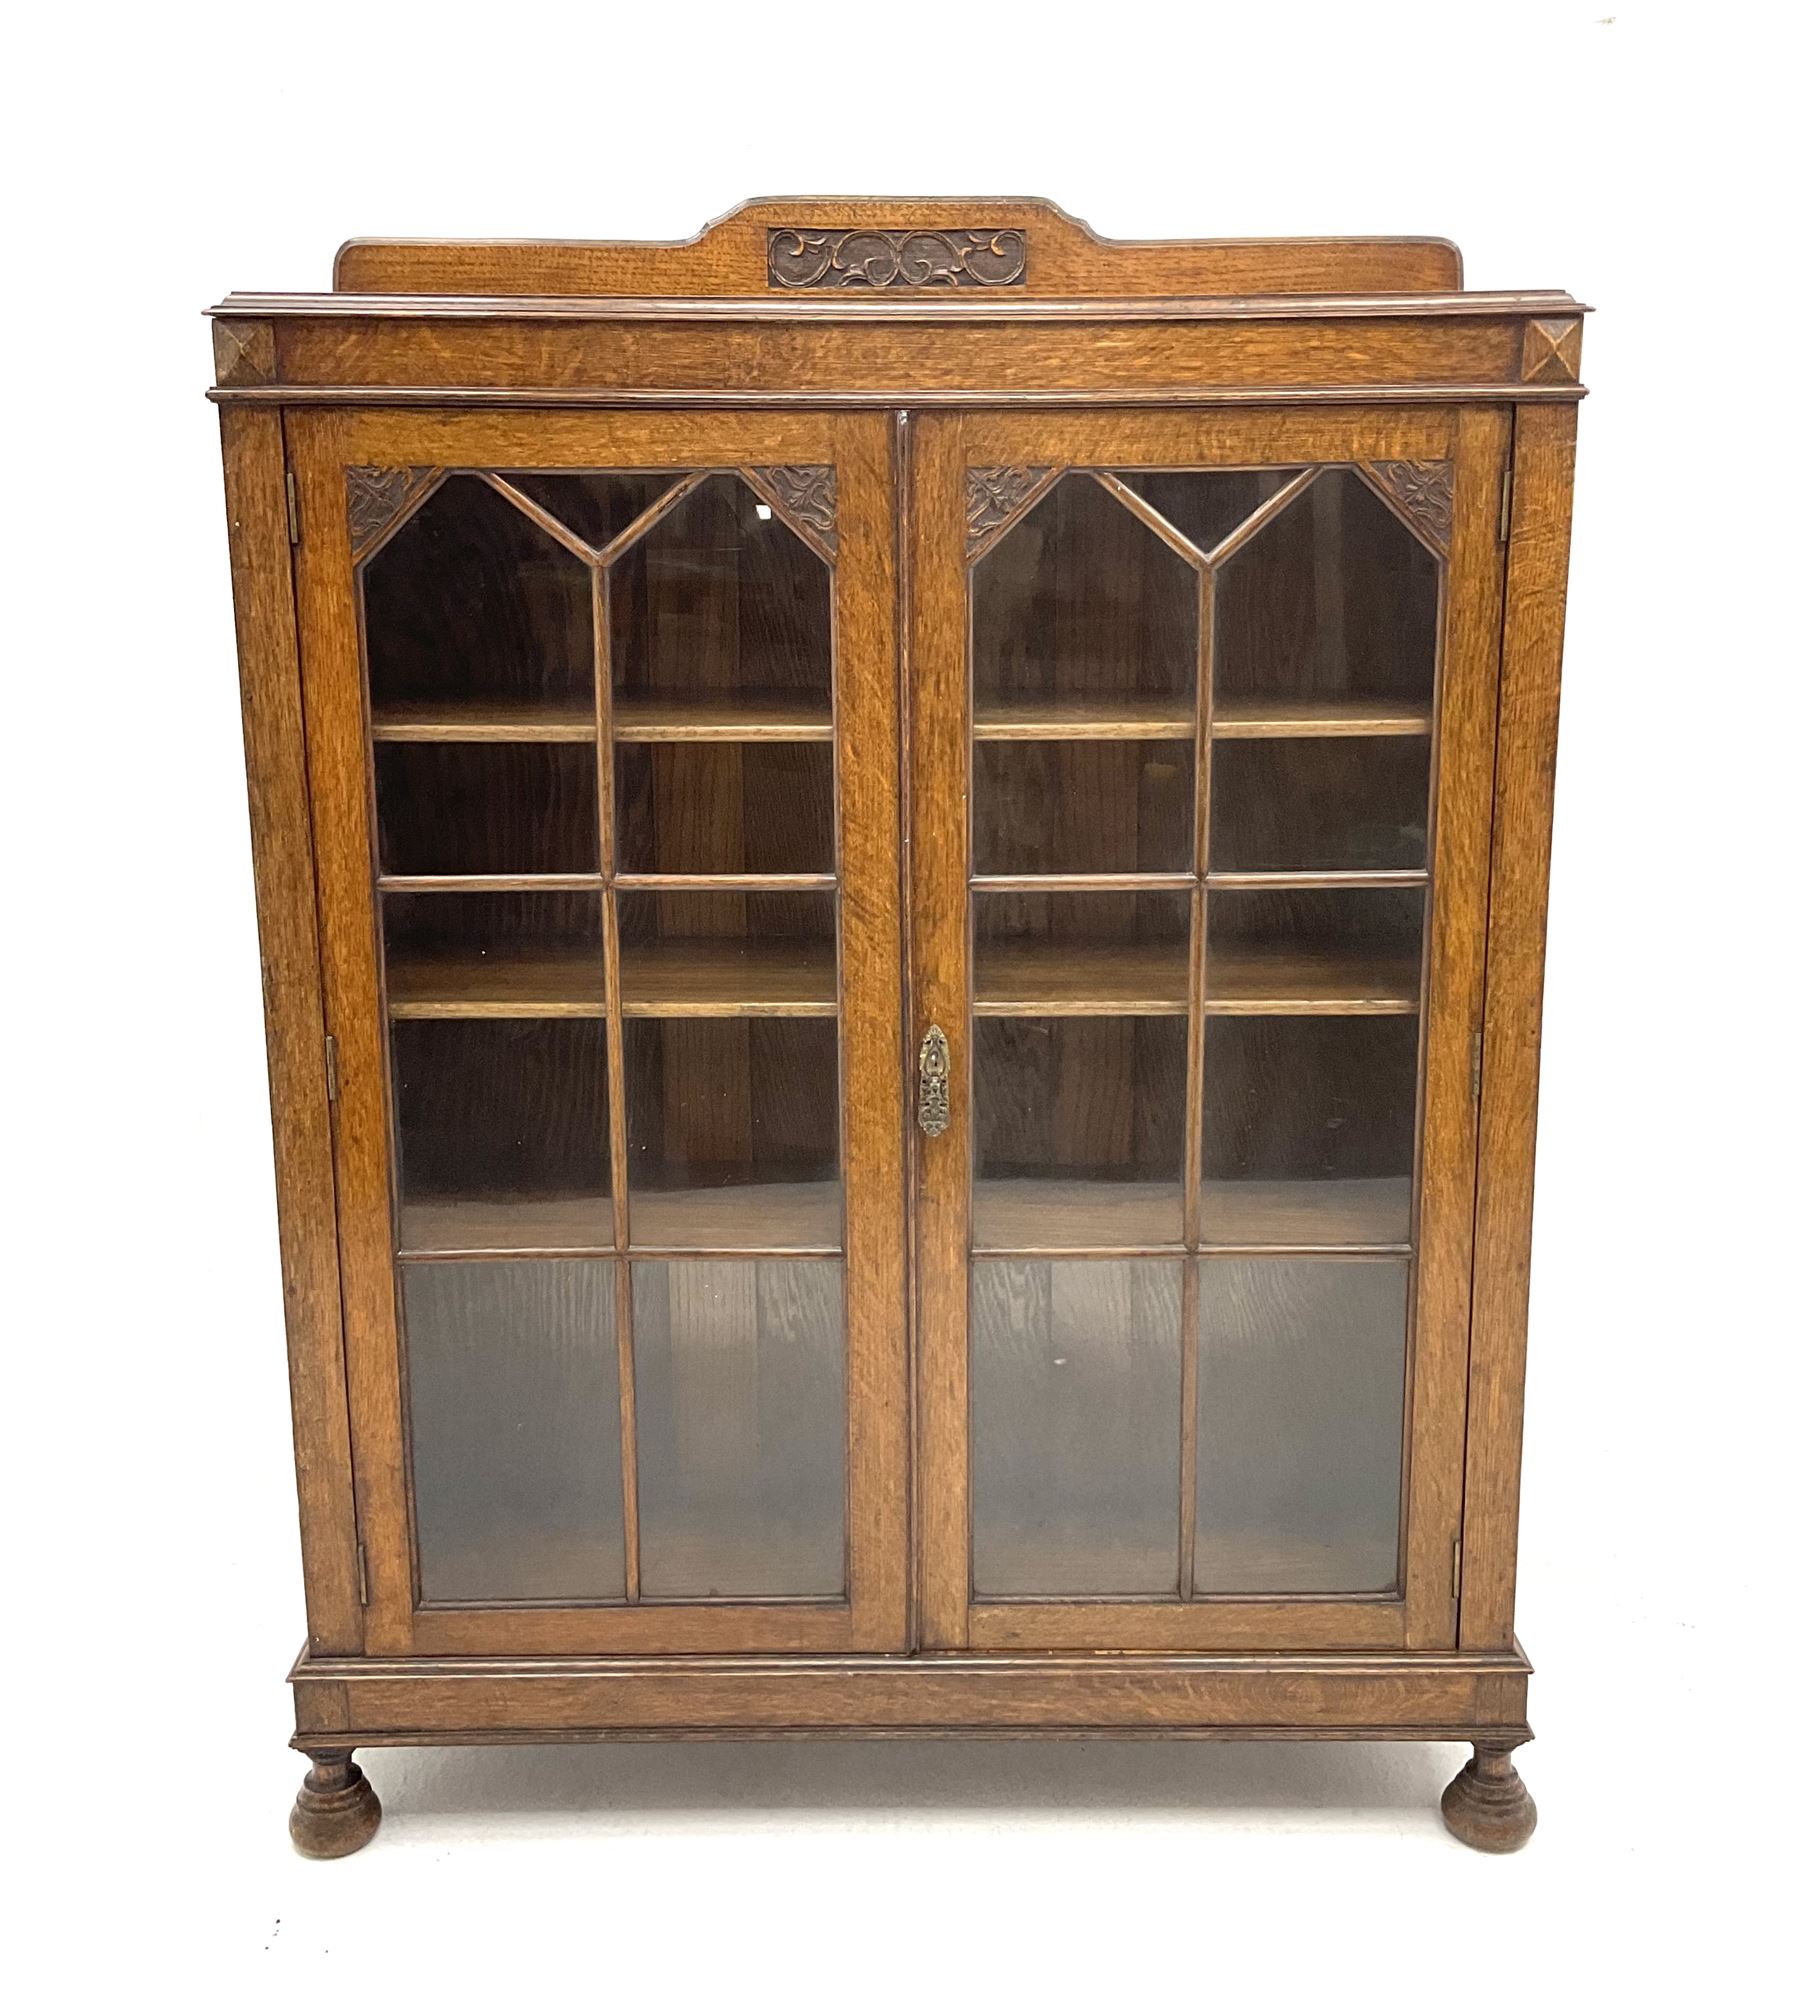 19th century oak display cabinet